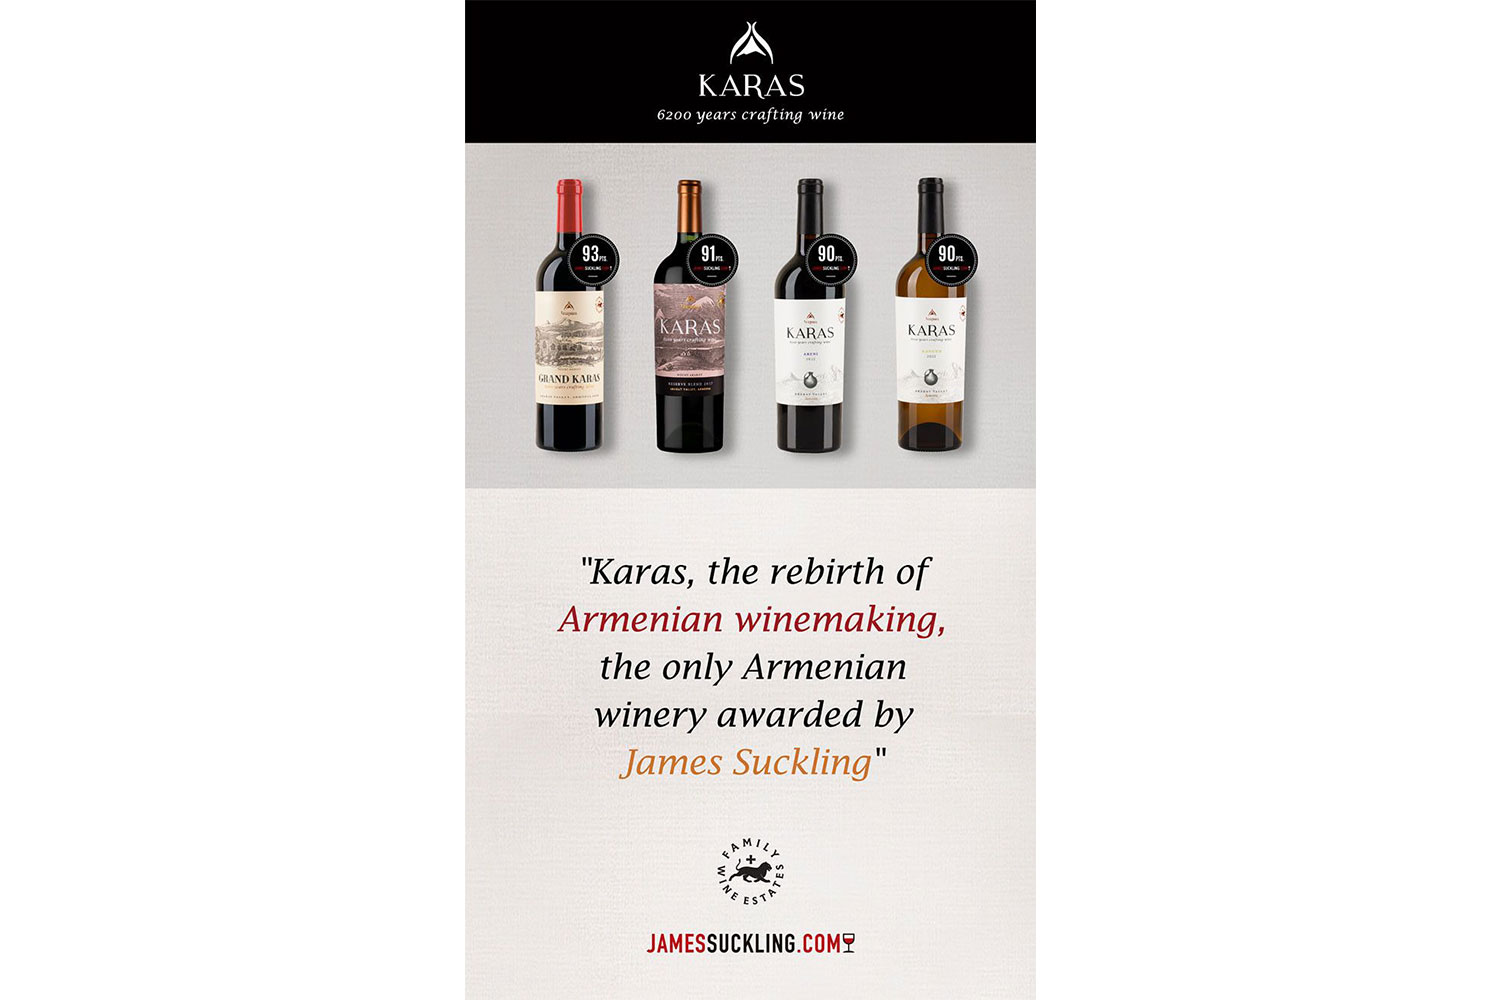 Karas Wines receive 4 prestigious international awards